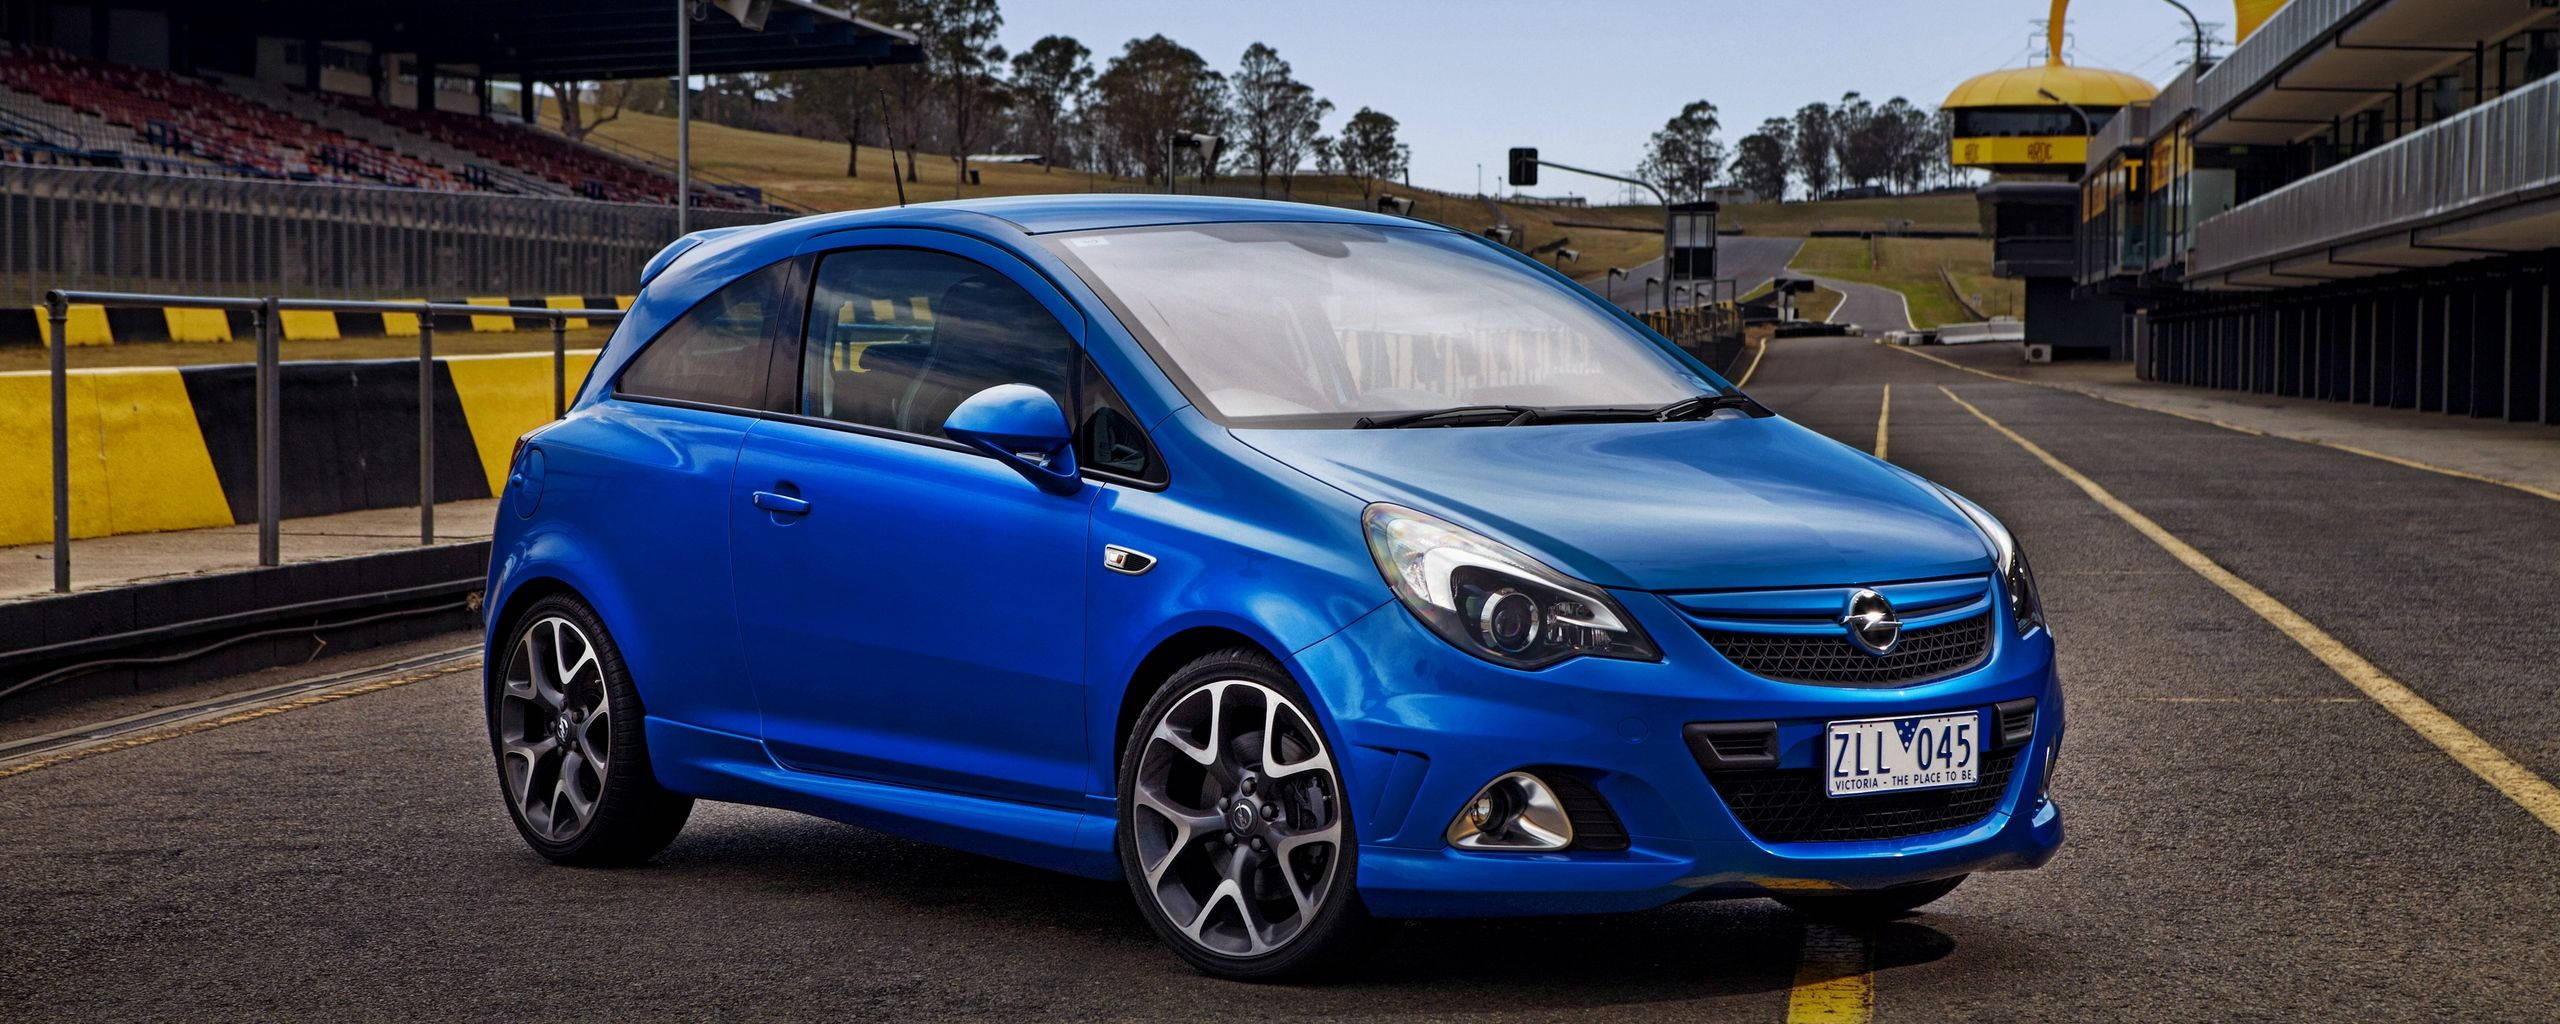 Blue Opel Corsa Background